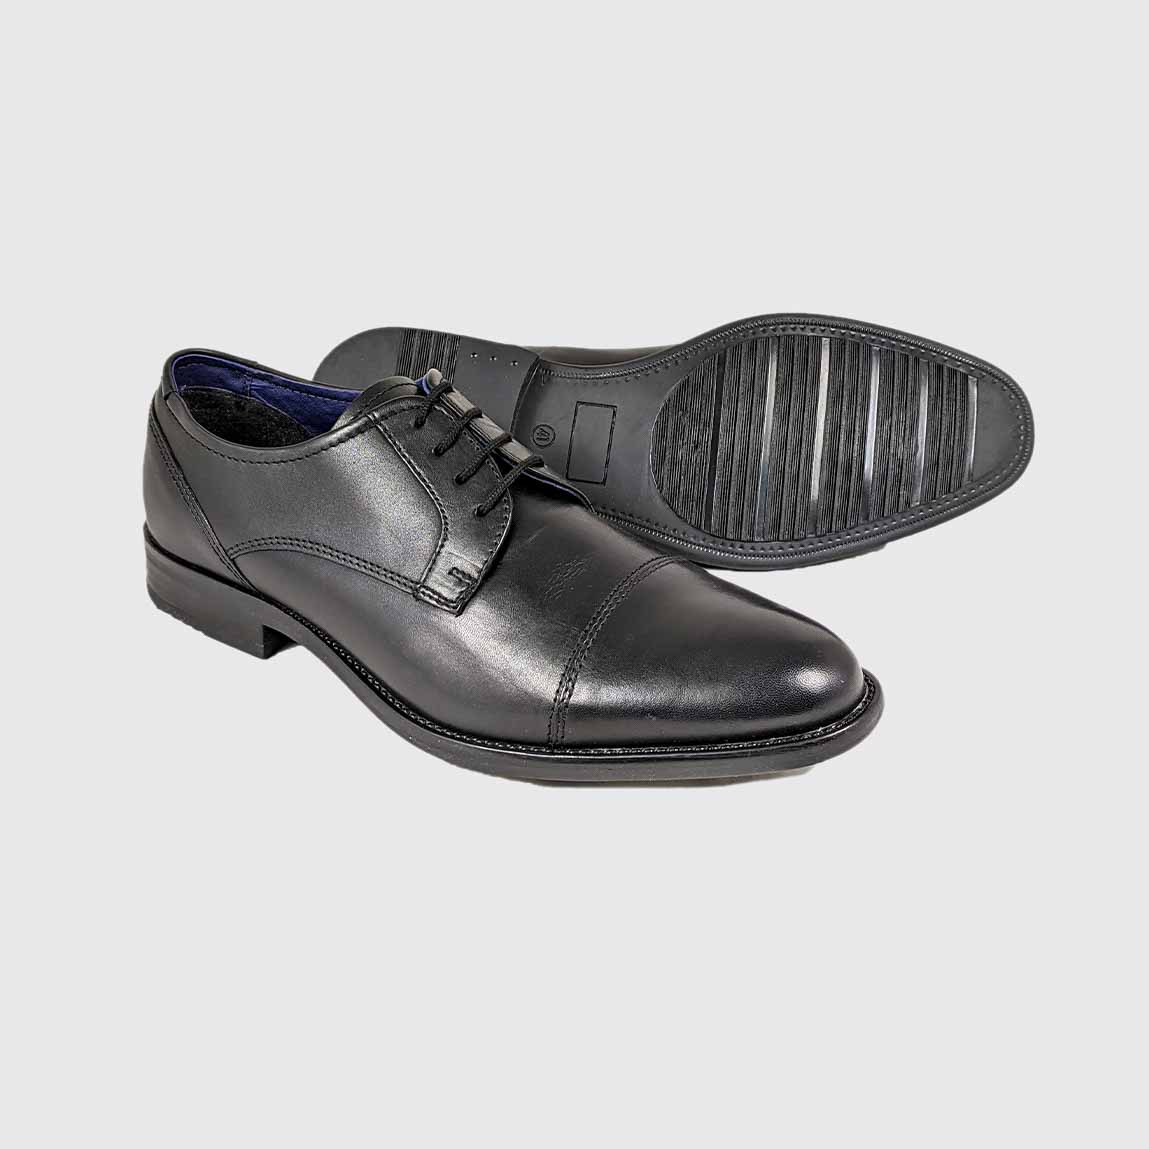 Image focusing on the sole of the Dubarry Derek Black shoe.